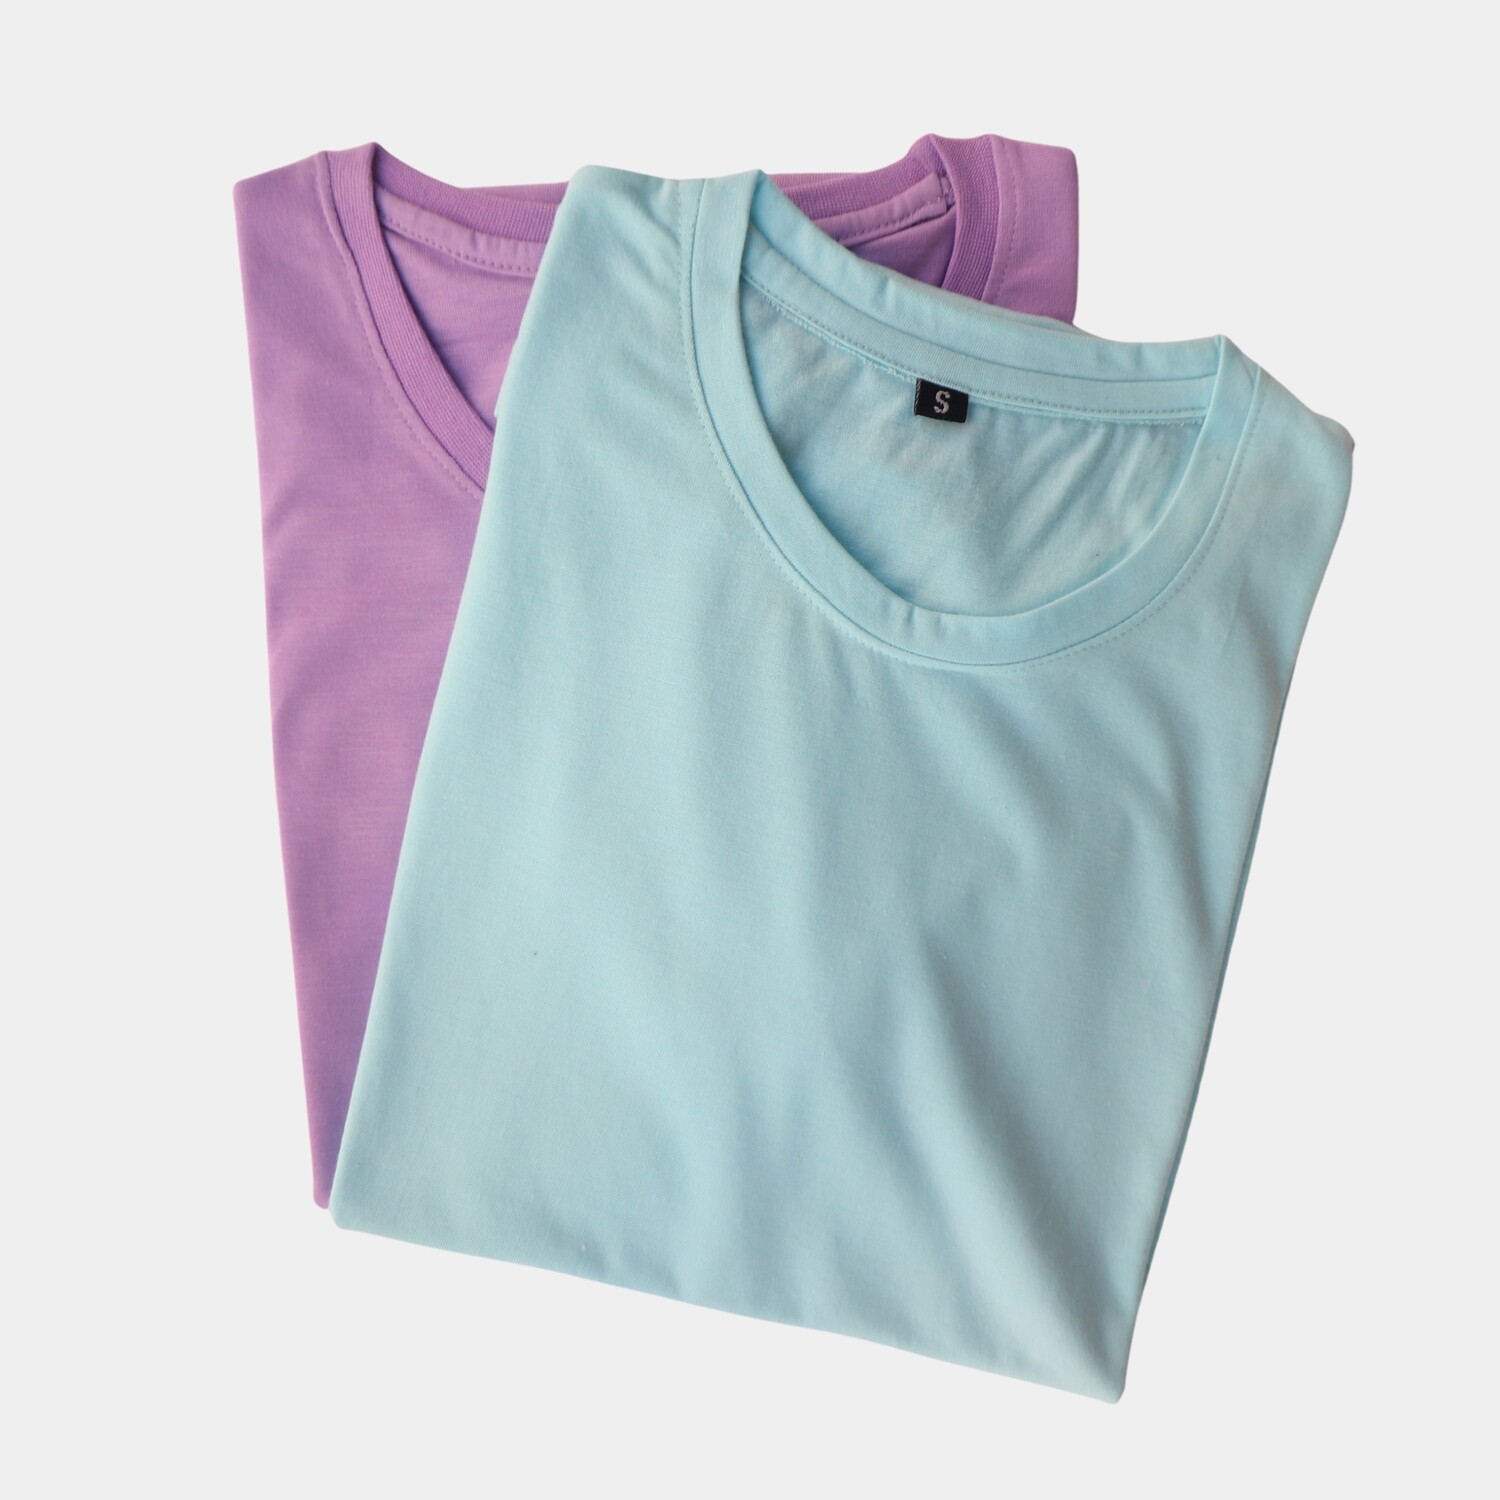 Unisex T-shirts (pack of 2) - Purple, Sky blue